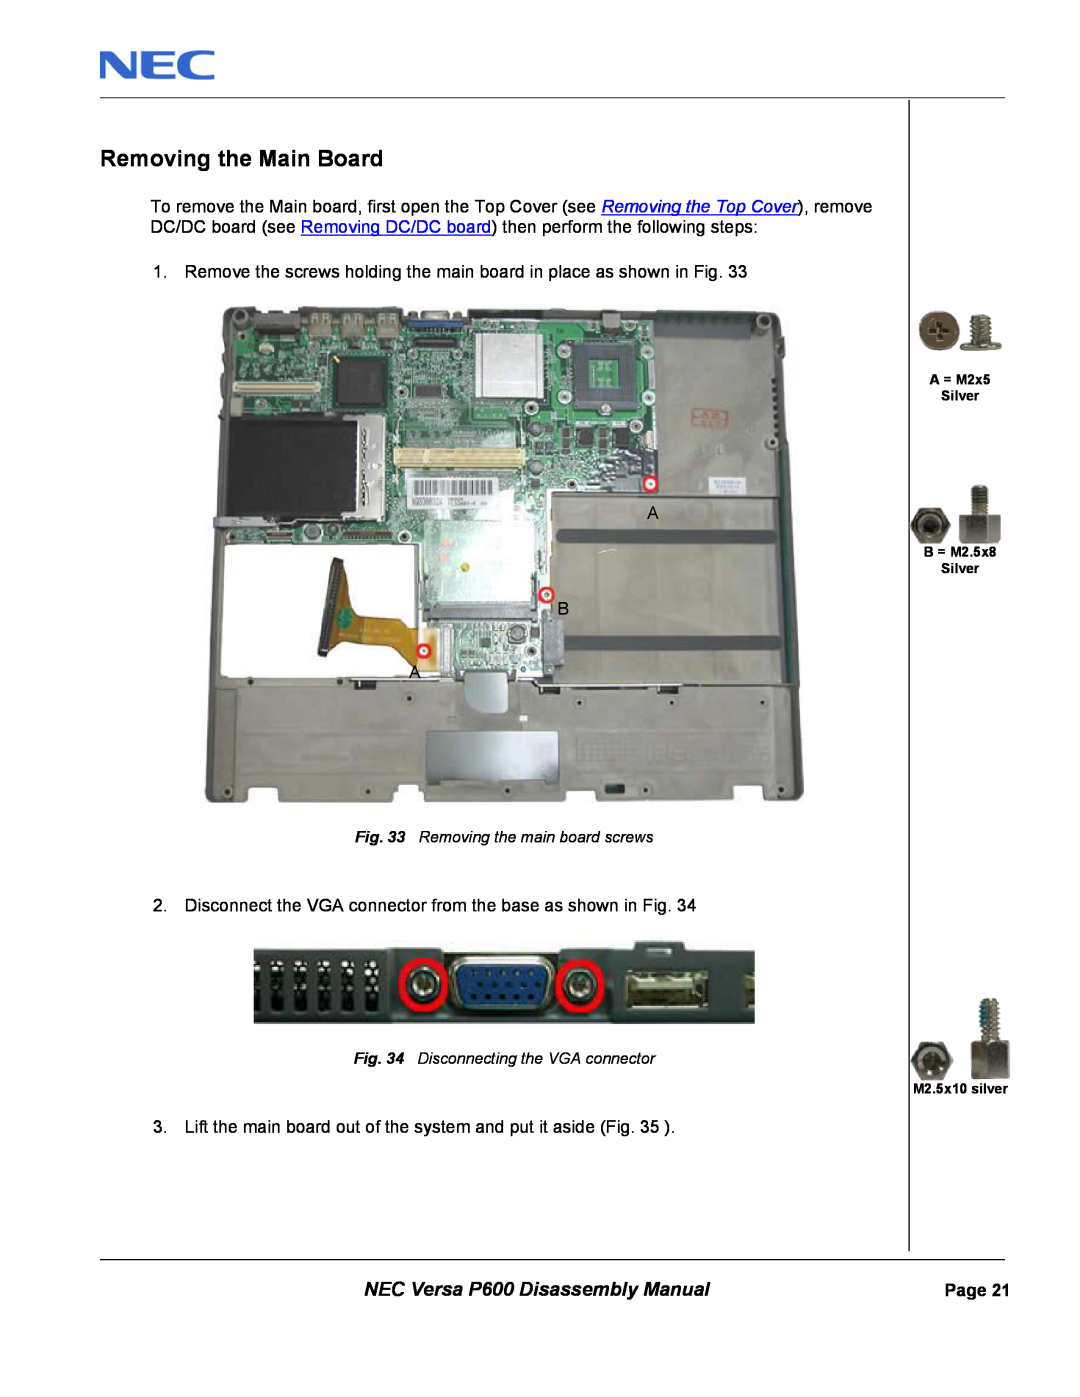 NEC manual Removing the Main Board, NEC Versa P600 Disassembly Manual 